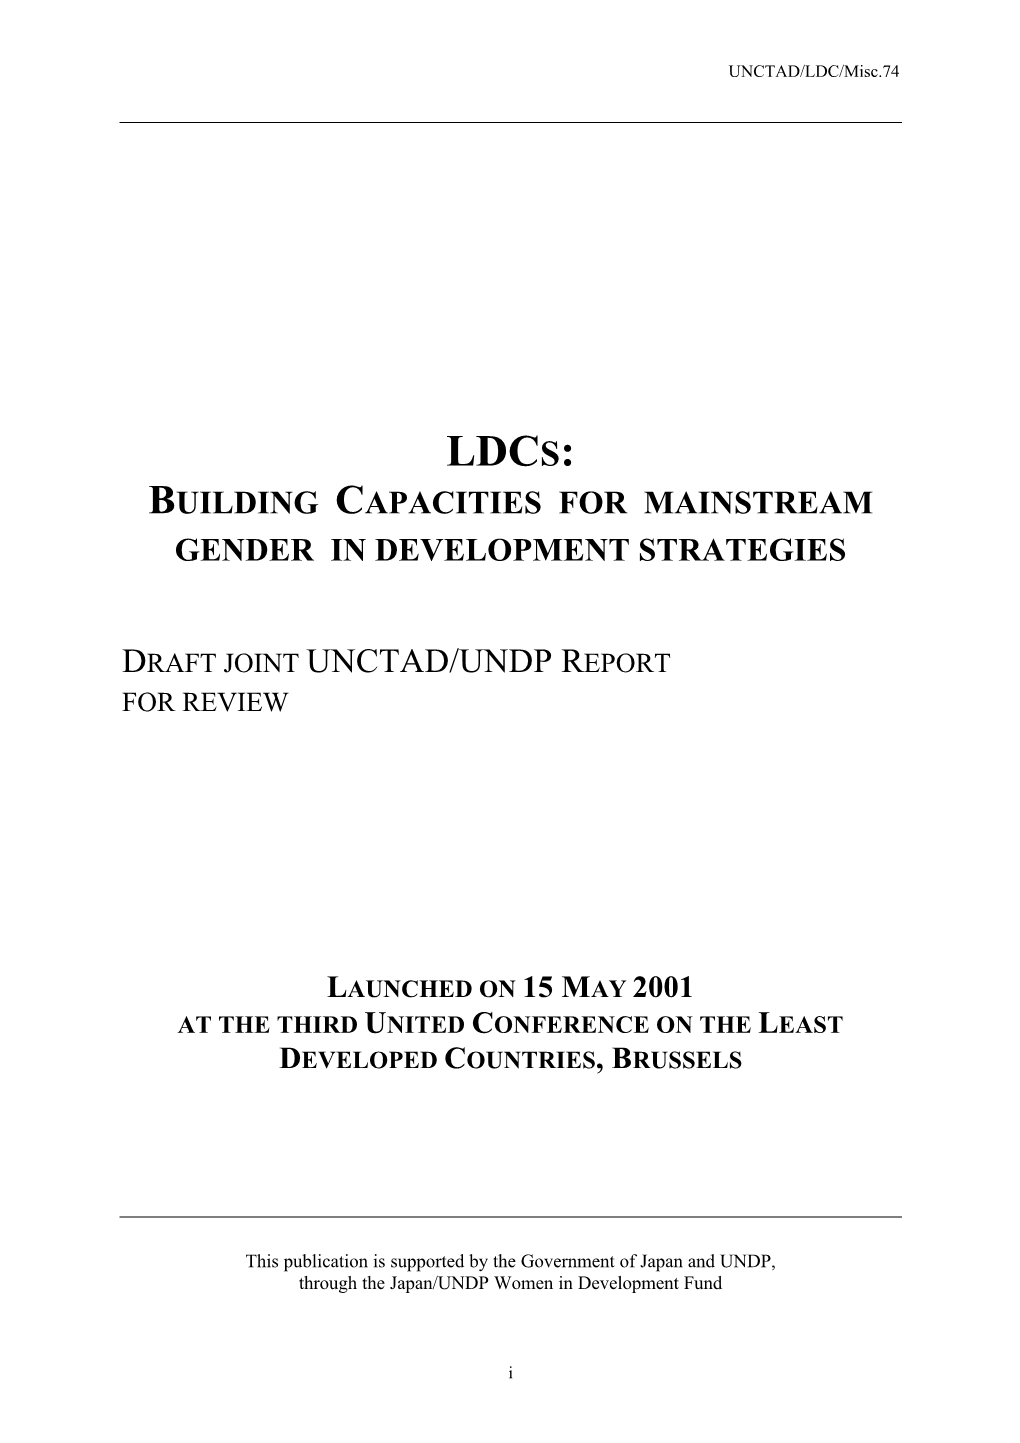 Ldcs: Building Capacities for Mainstream Gender in Development Strategies